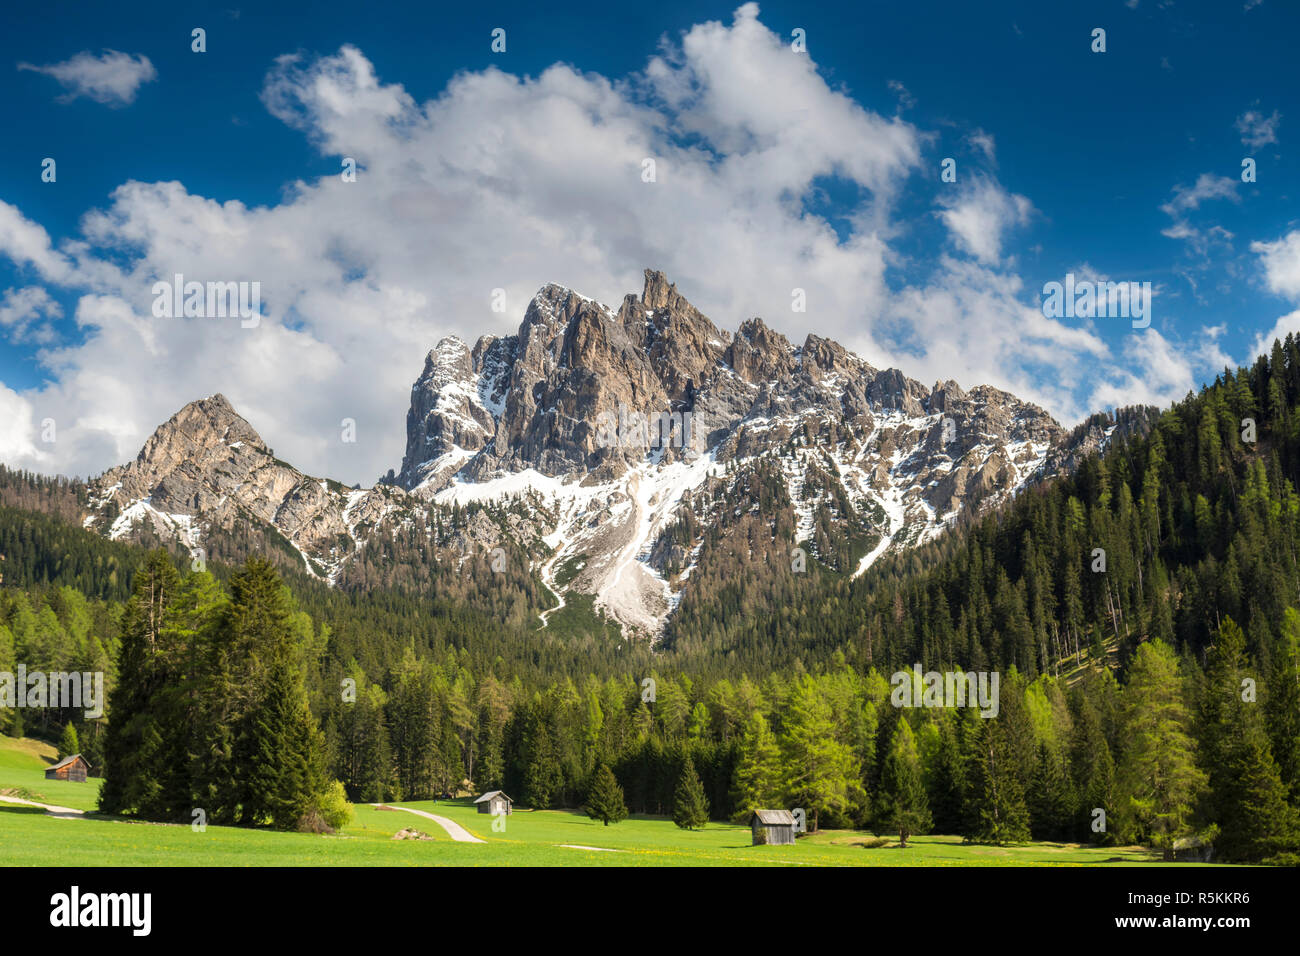 sarlkofel,pragser dolomites,fanes-sennes-prags nature park,hochpustertal,south tyrol province,italy Stock Photo